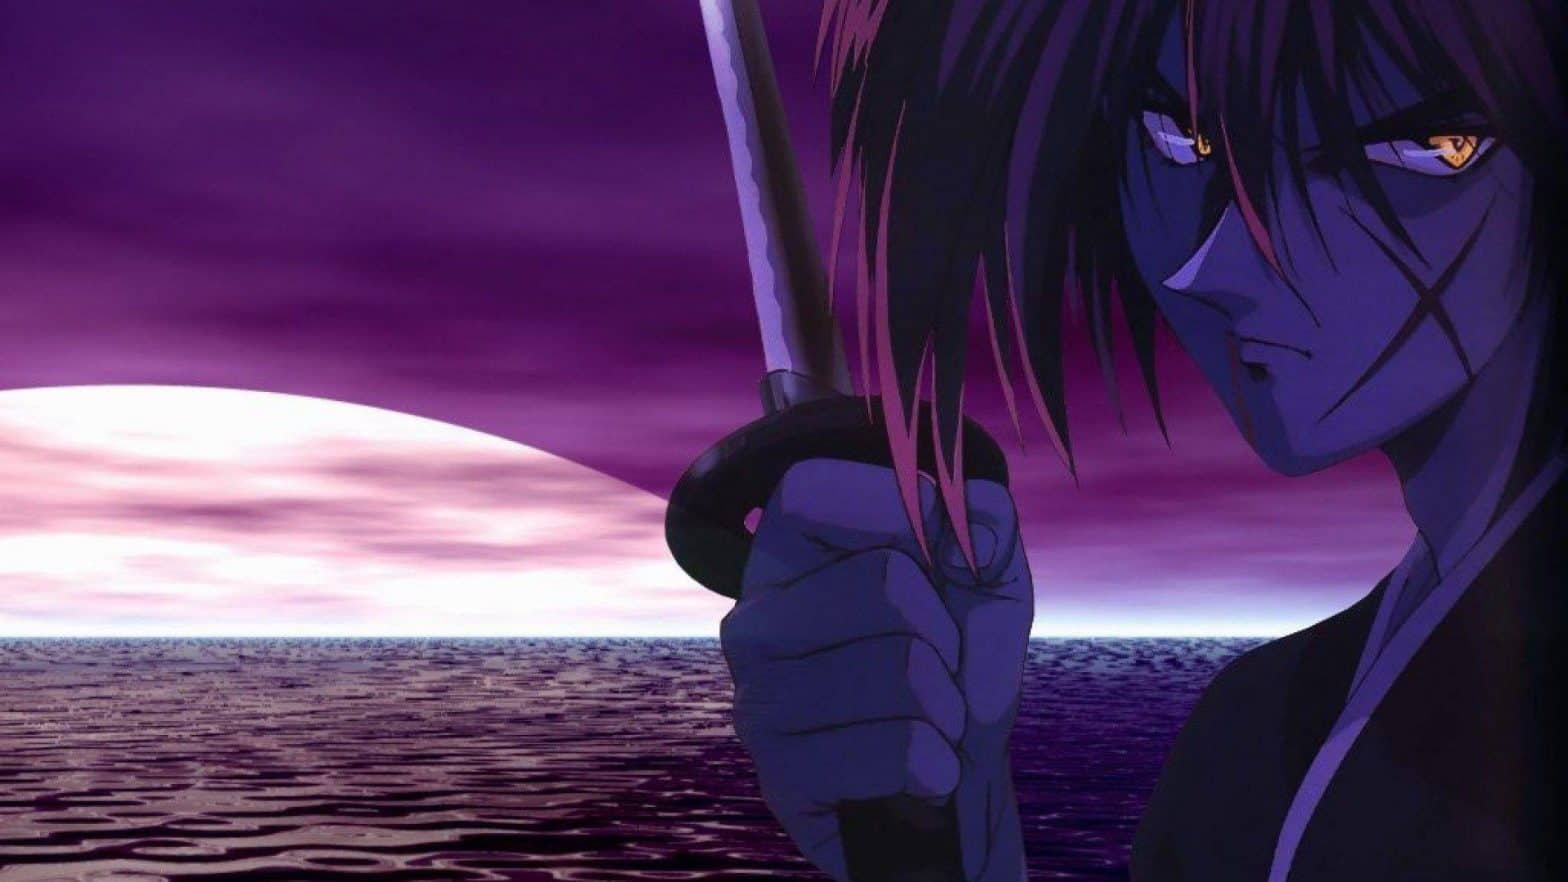 Rurouni Kenshin Episode 4 Release Date, Spoilers & How to Watch